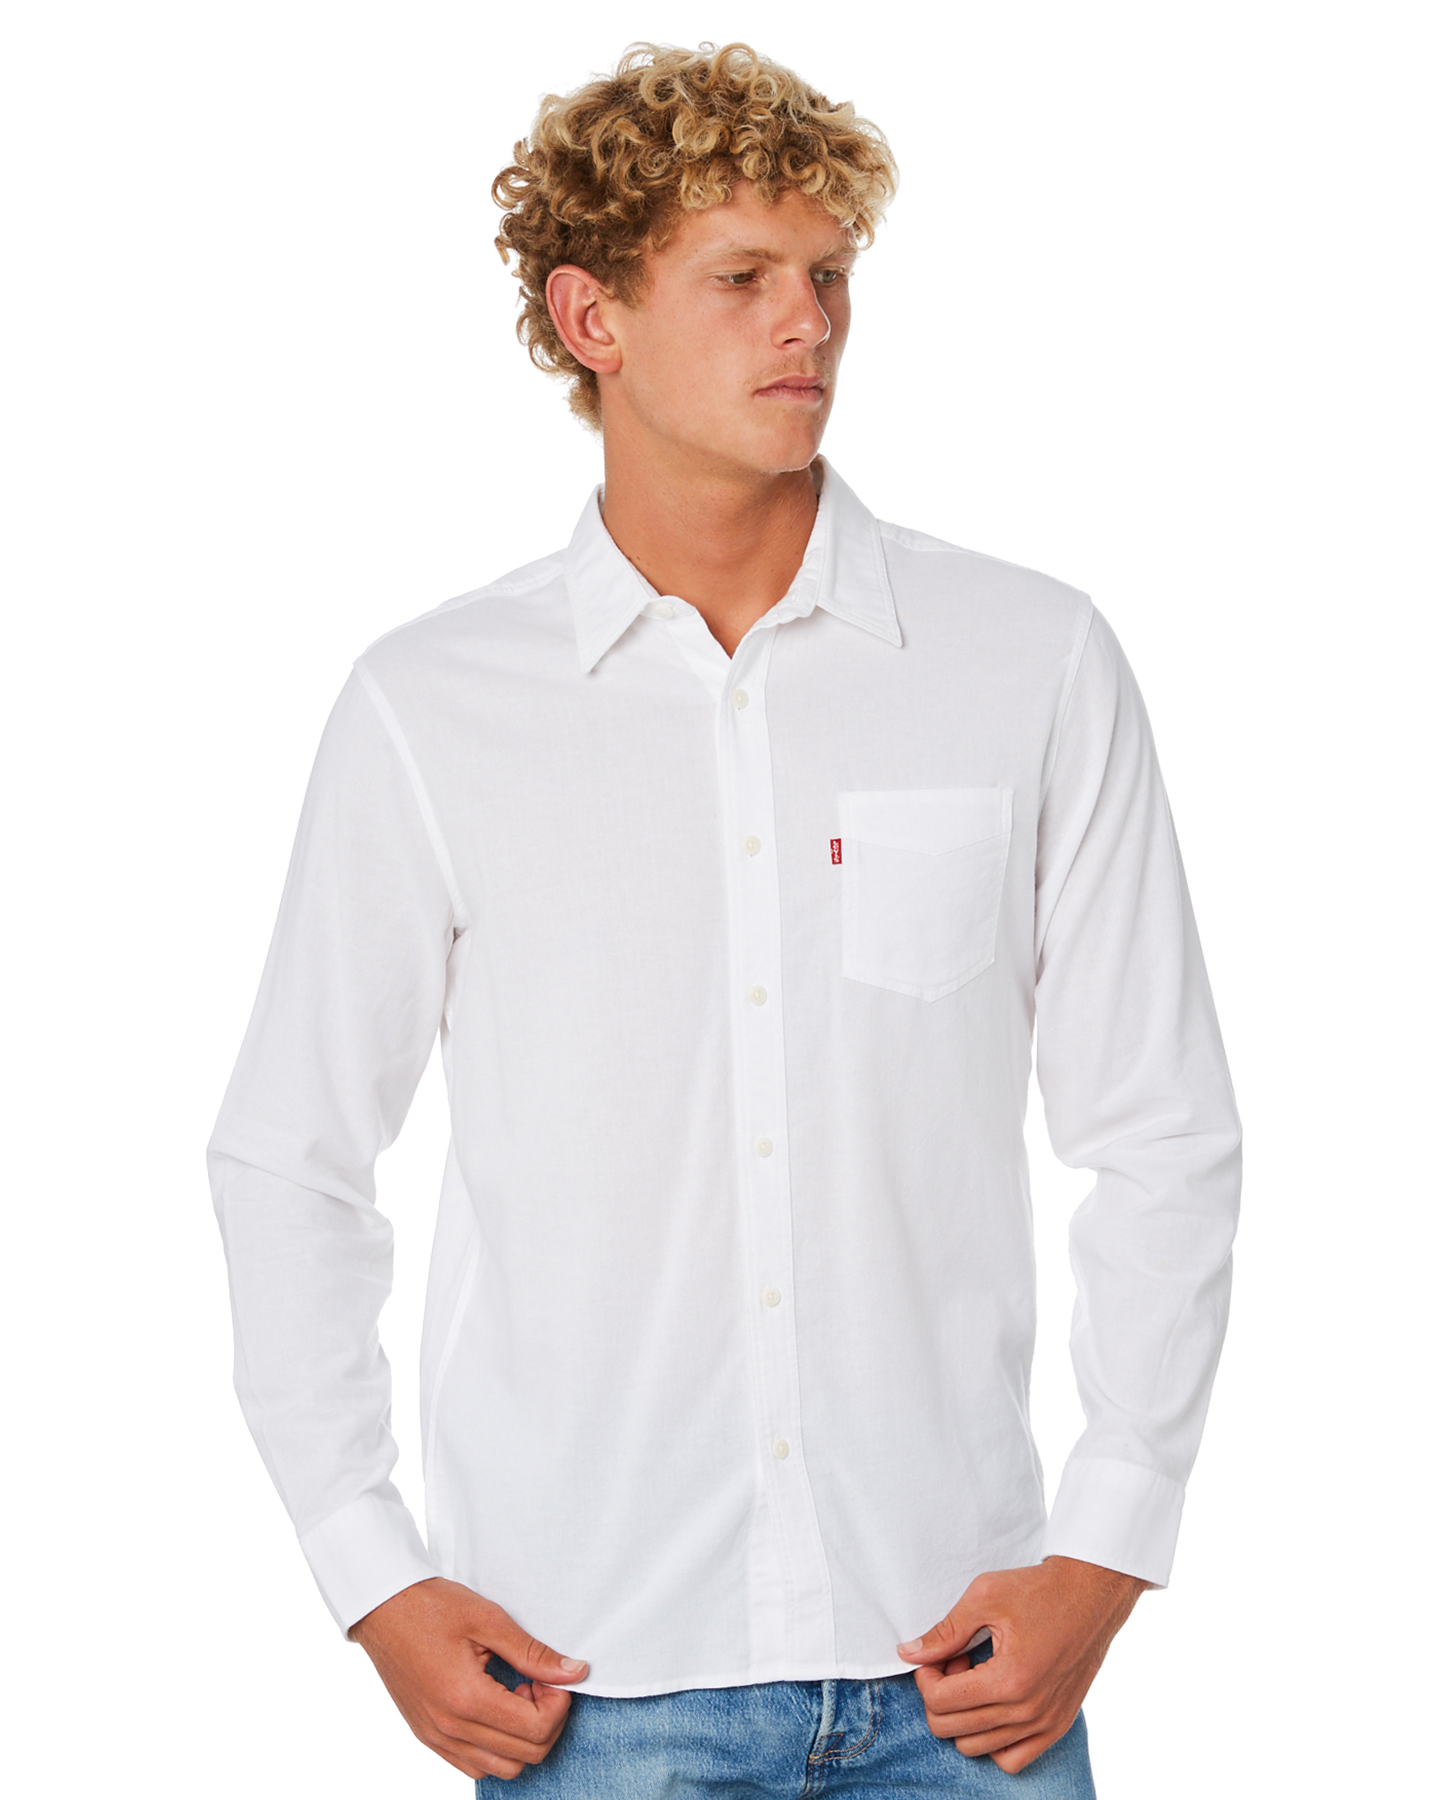 levis white button up shirt